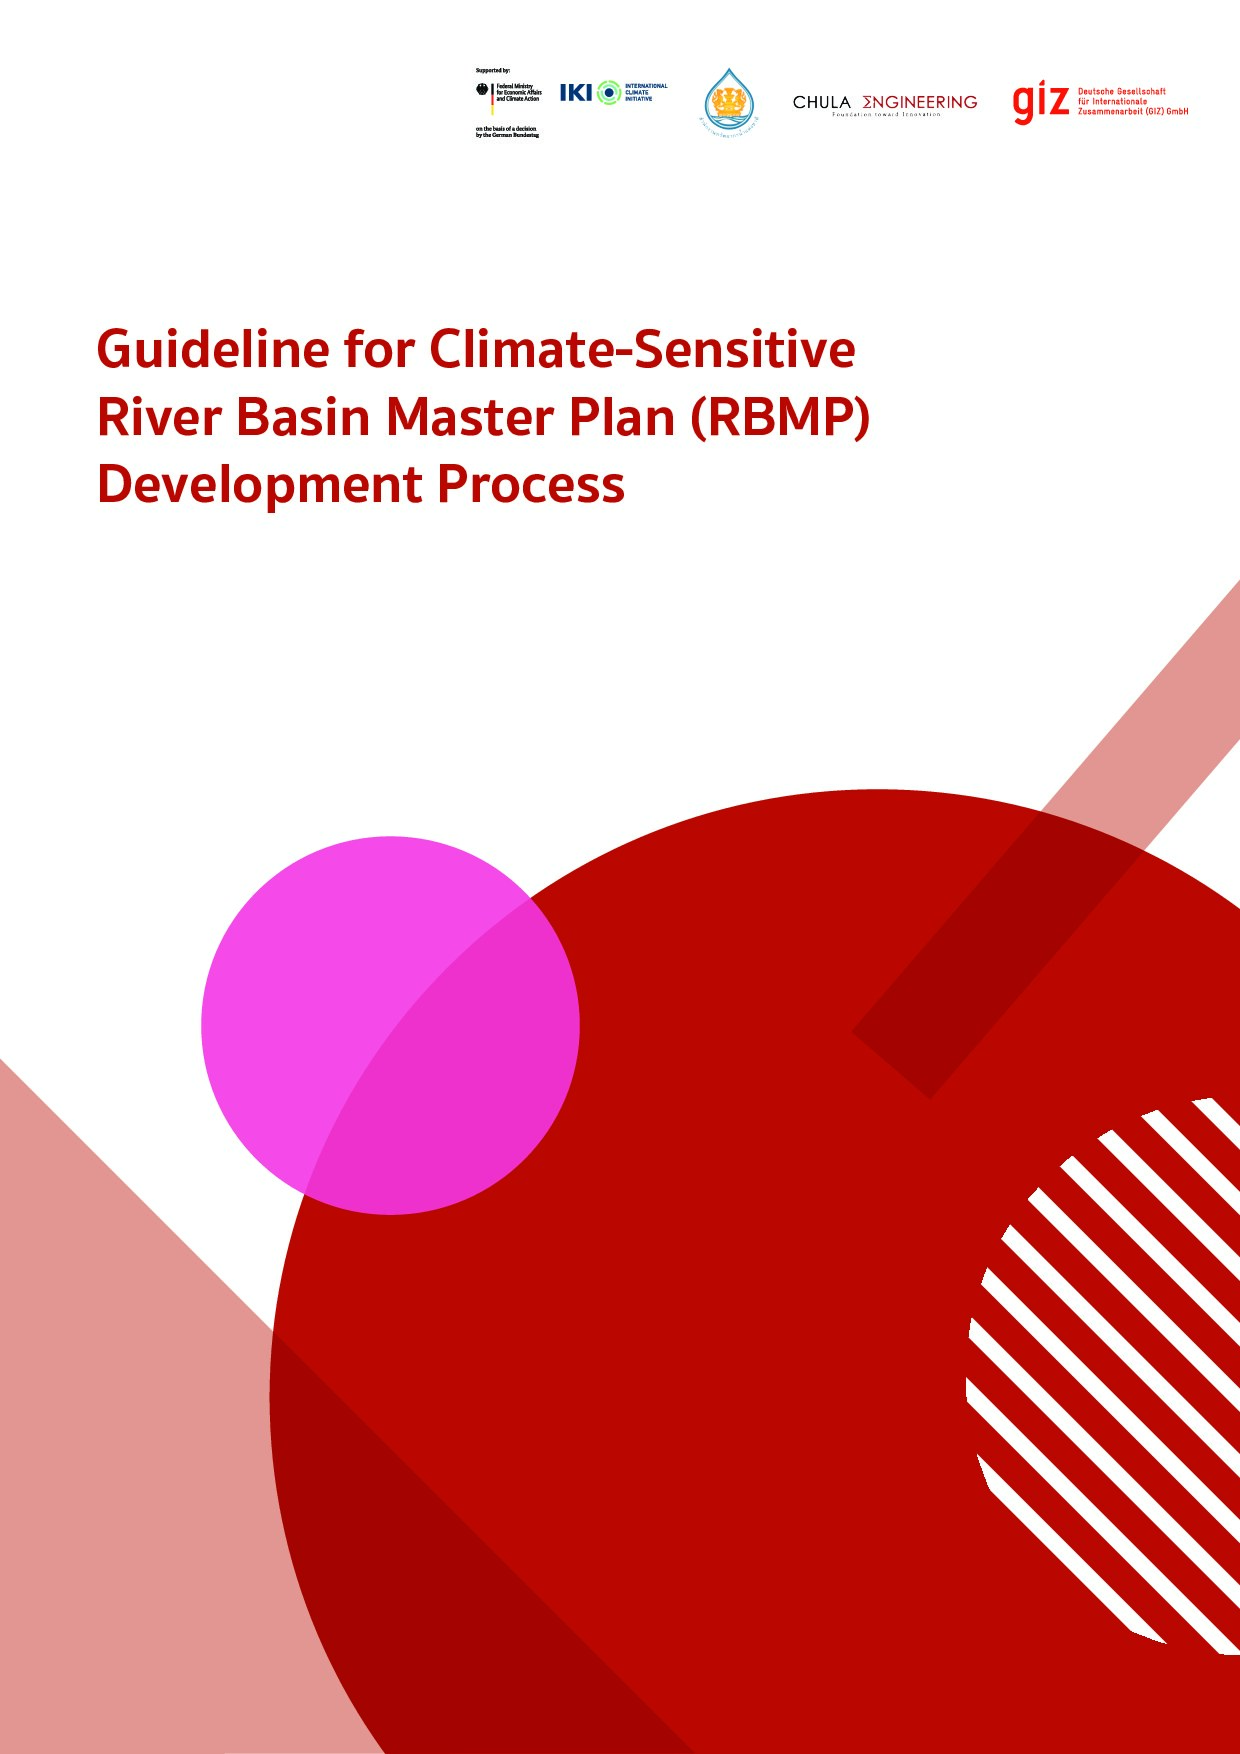 Guideline for Climate-Sensitive River Basin Master Plan (RBMP) Development Process